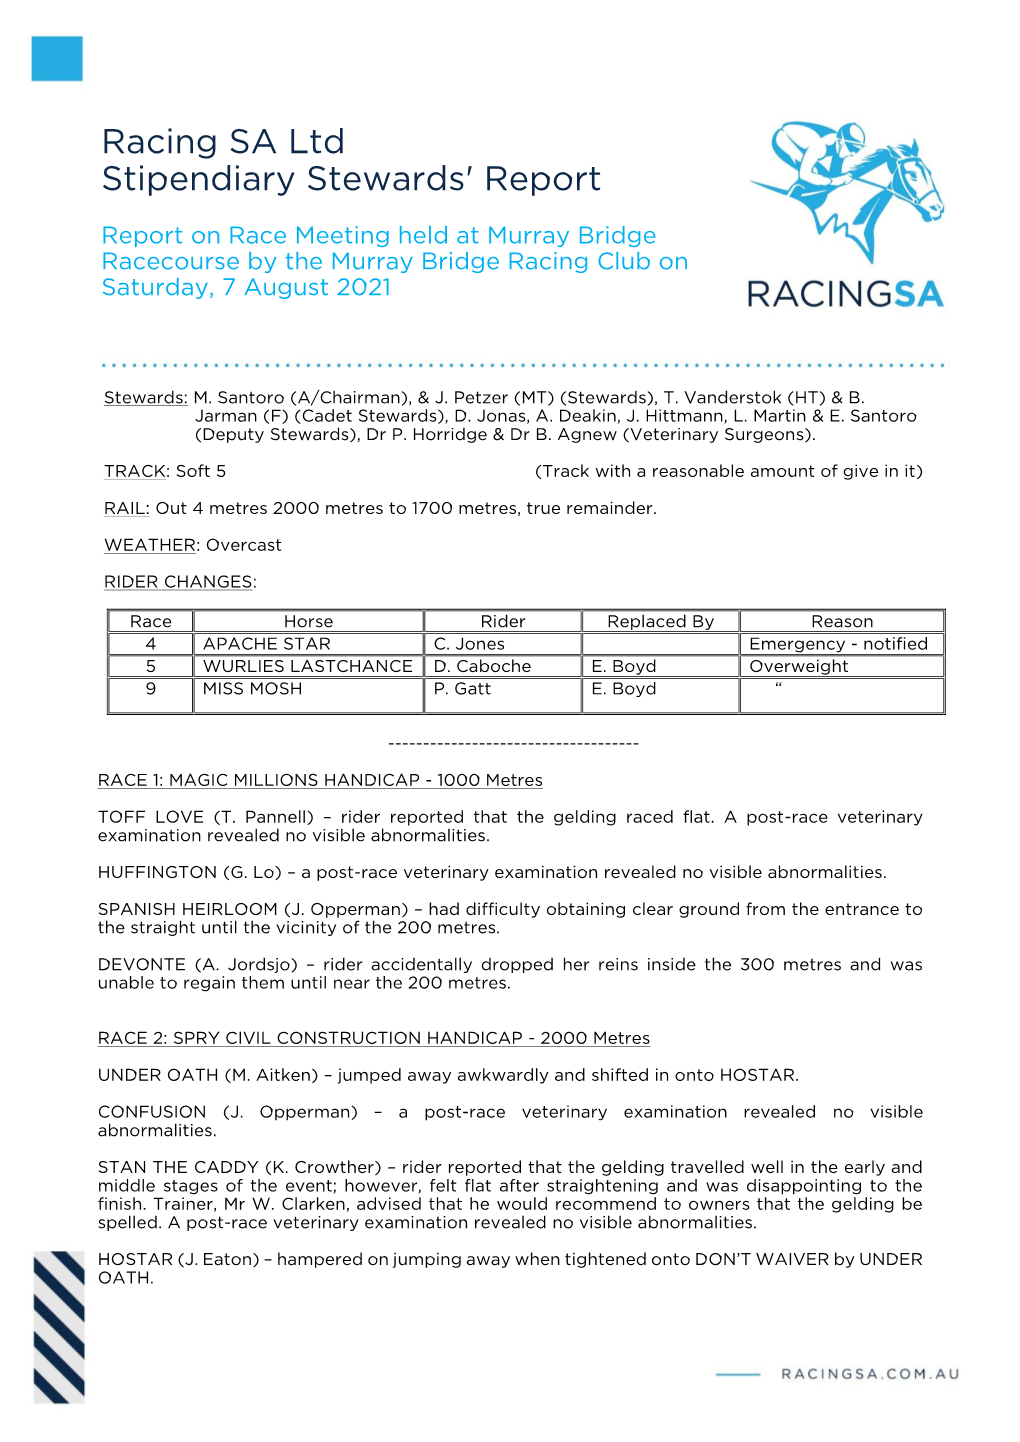 Racing SA Ltd Stipendiary Stewards' Report